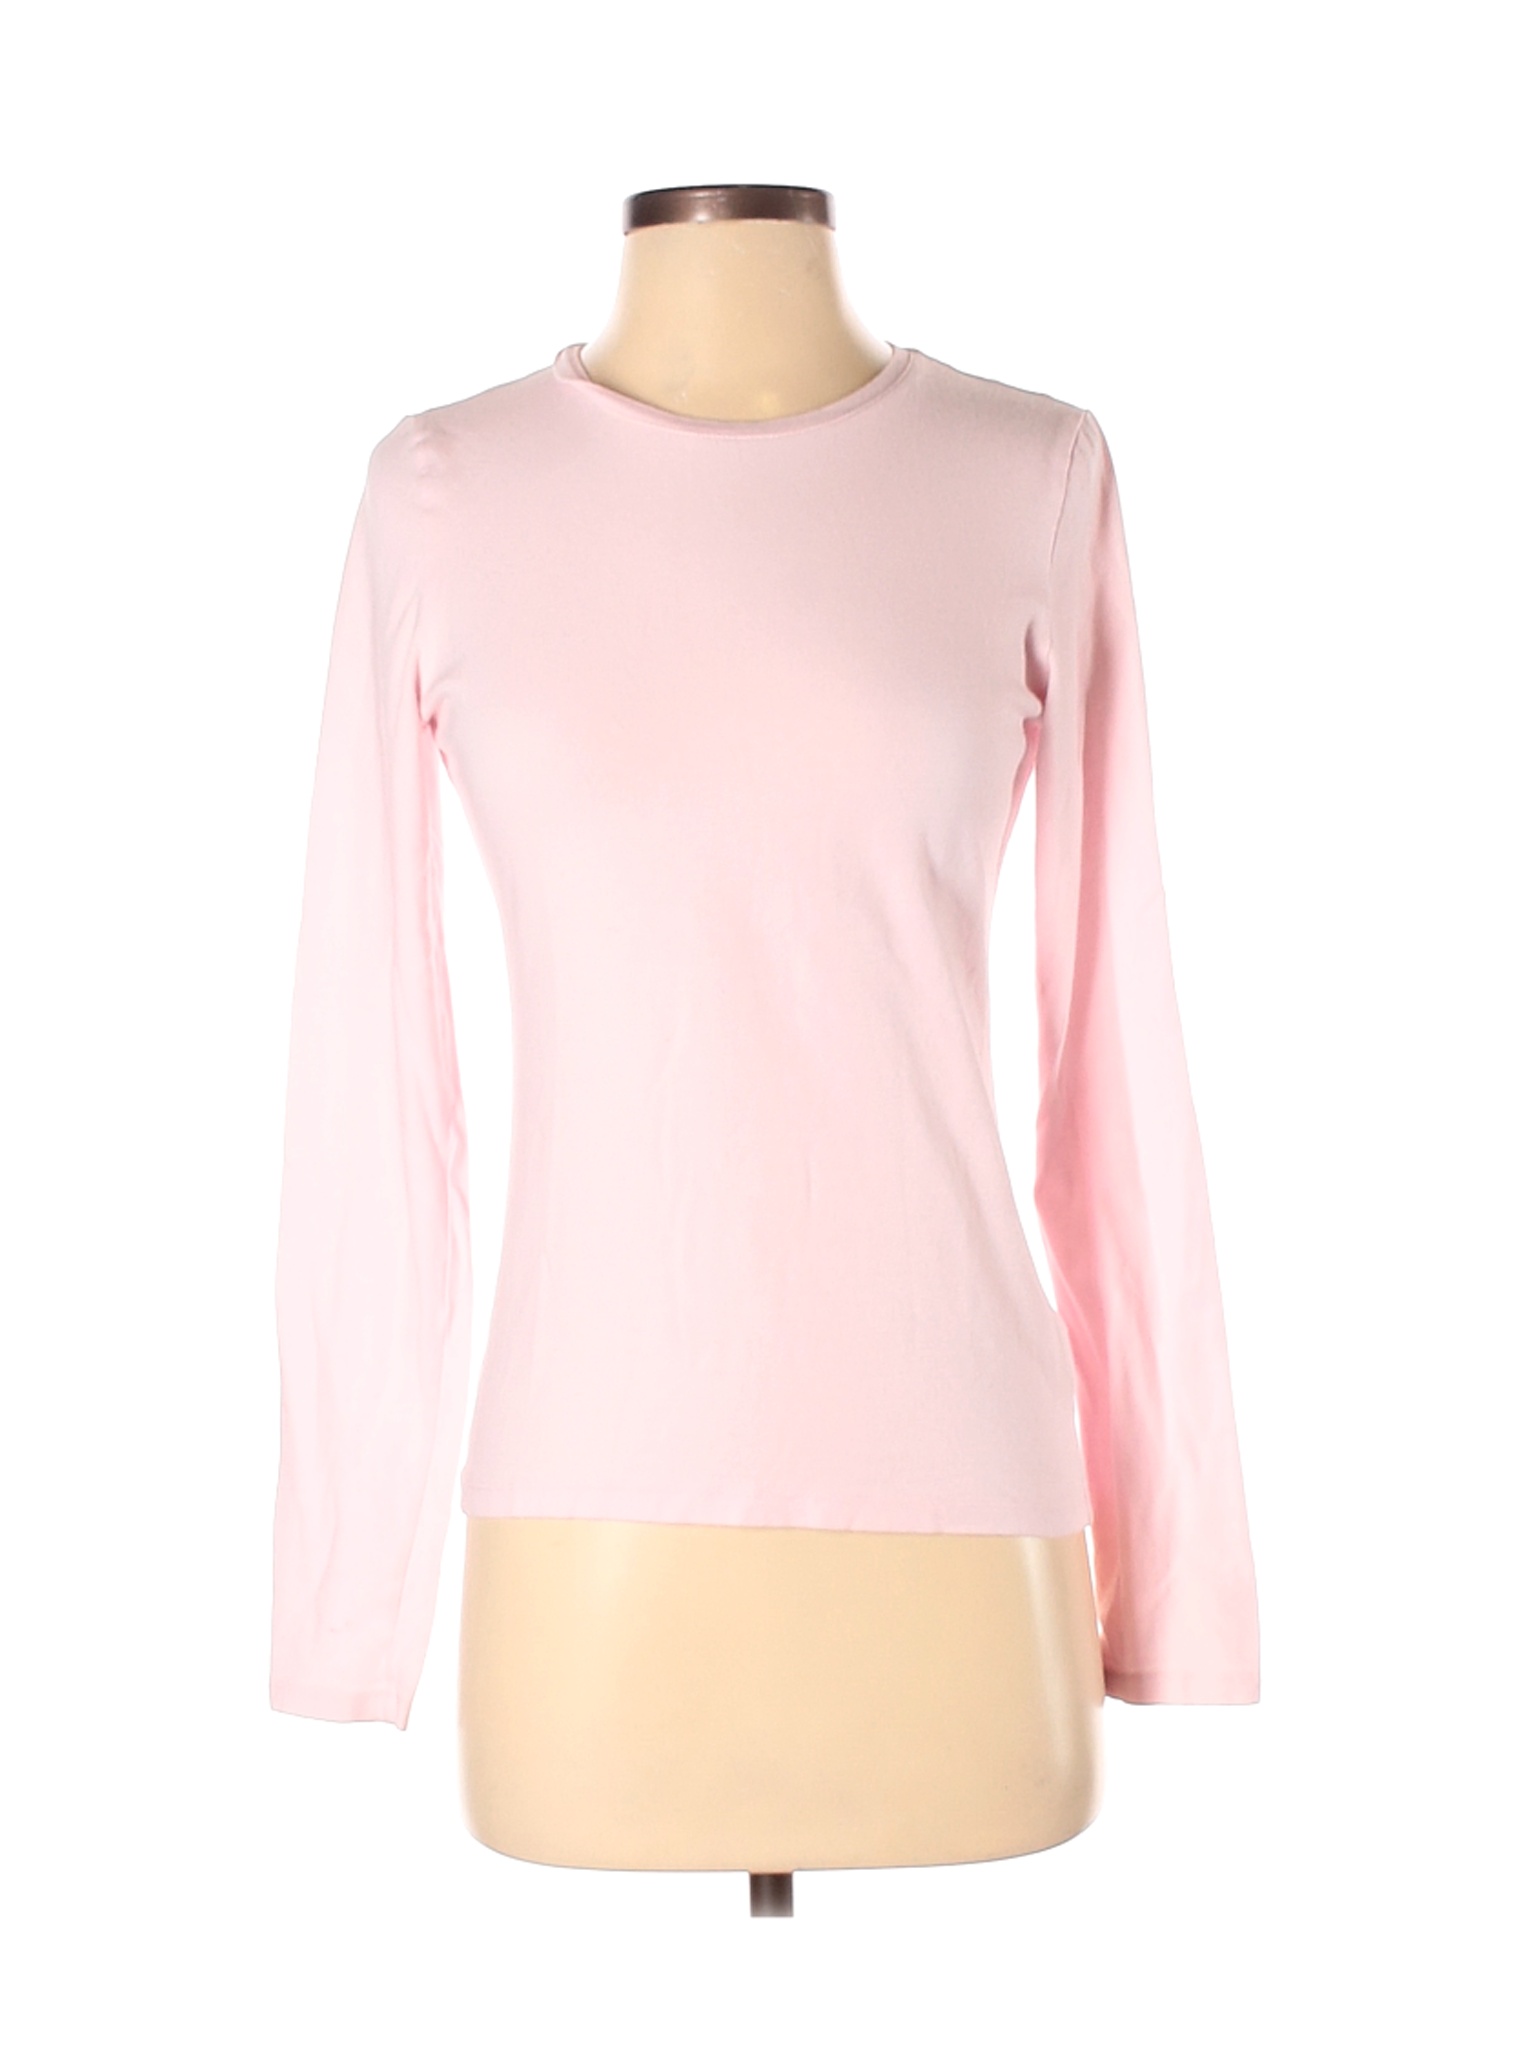 Gap Women Pink Long Sleeve T-Shirt S | eBay